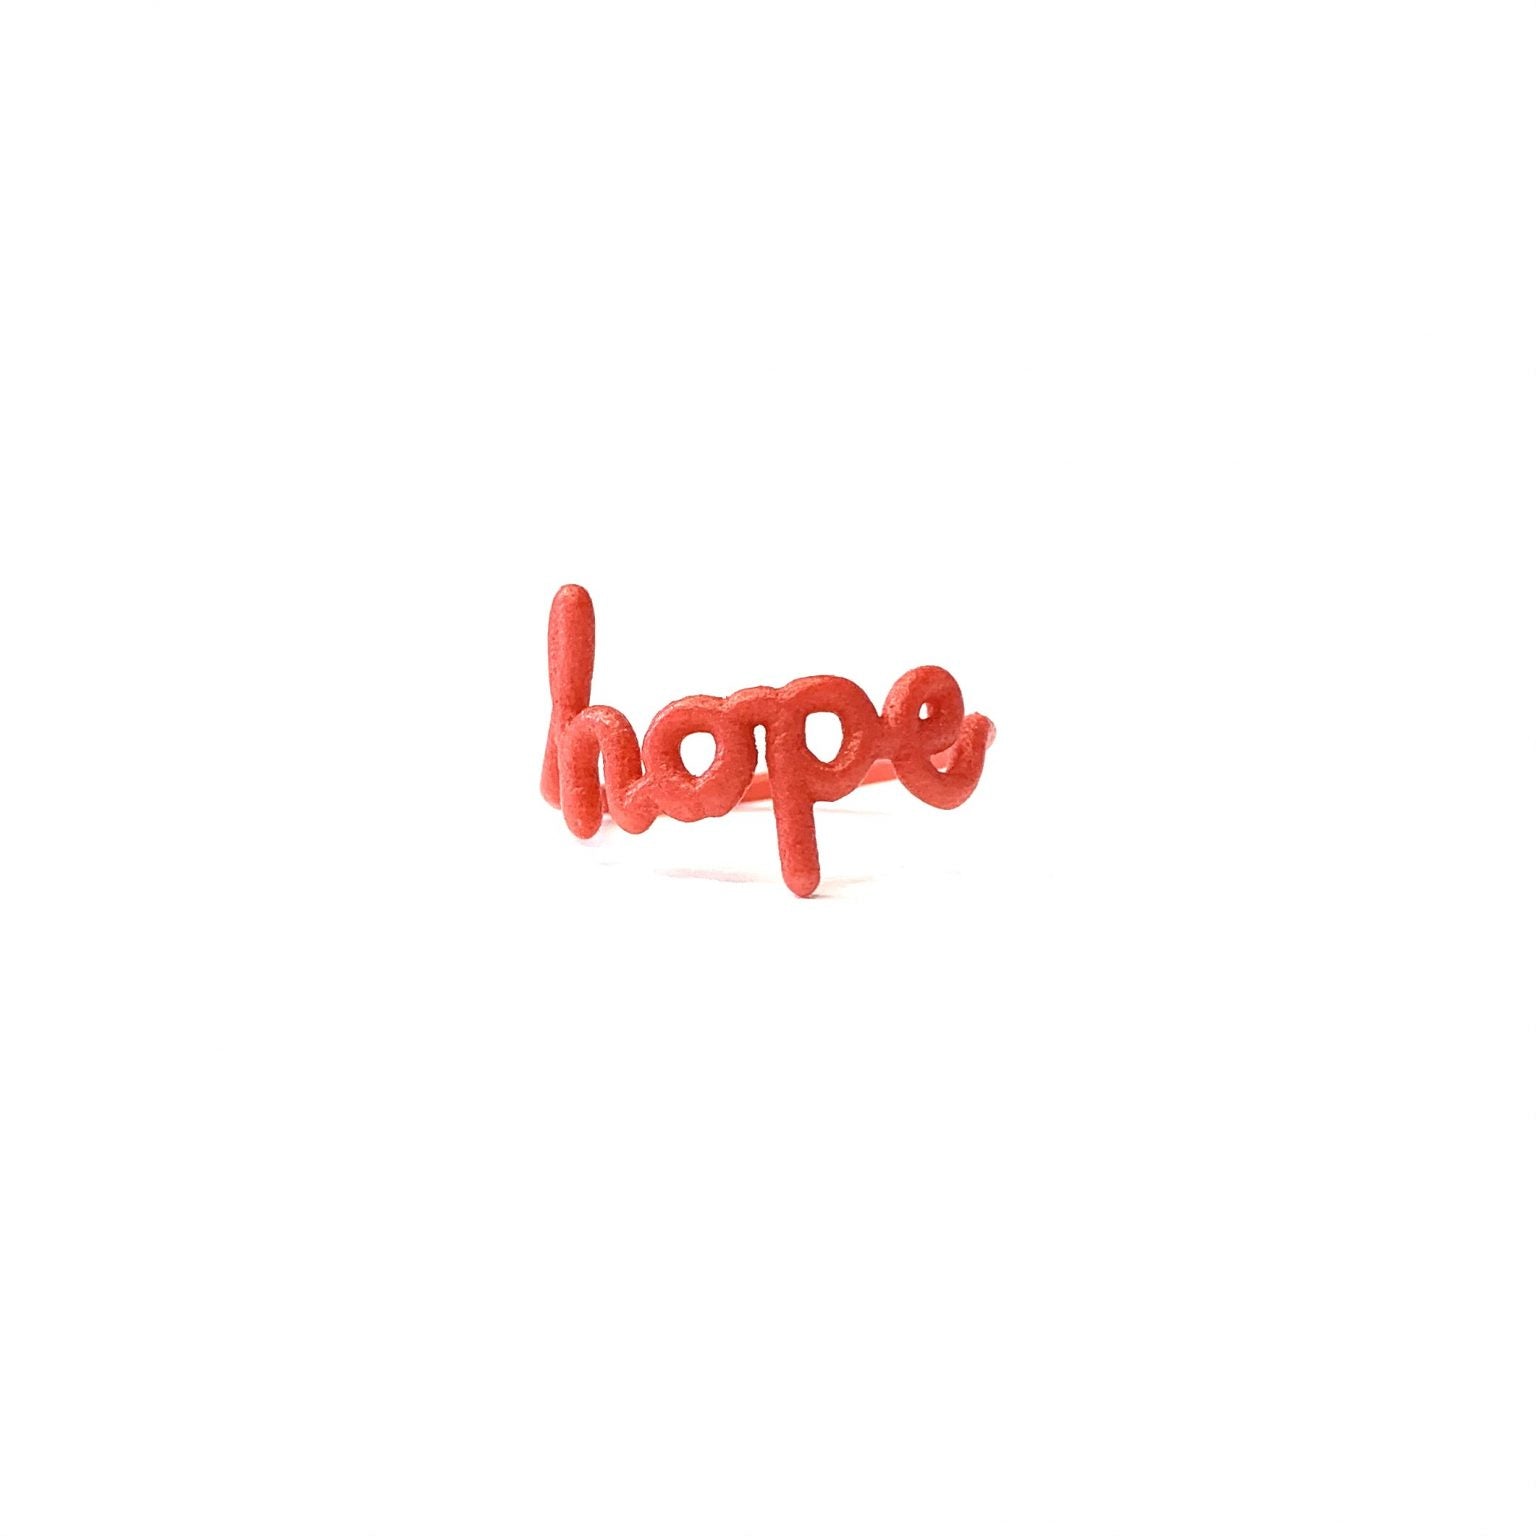 Zoe Sherwood 'Hope' Ring in red